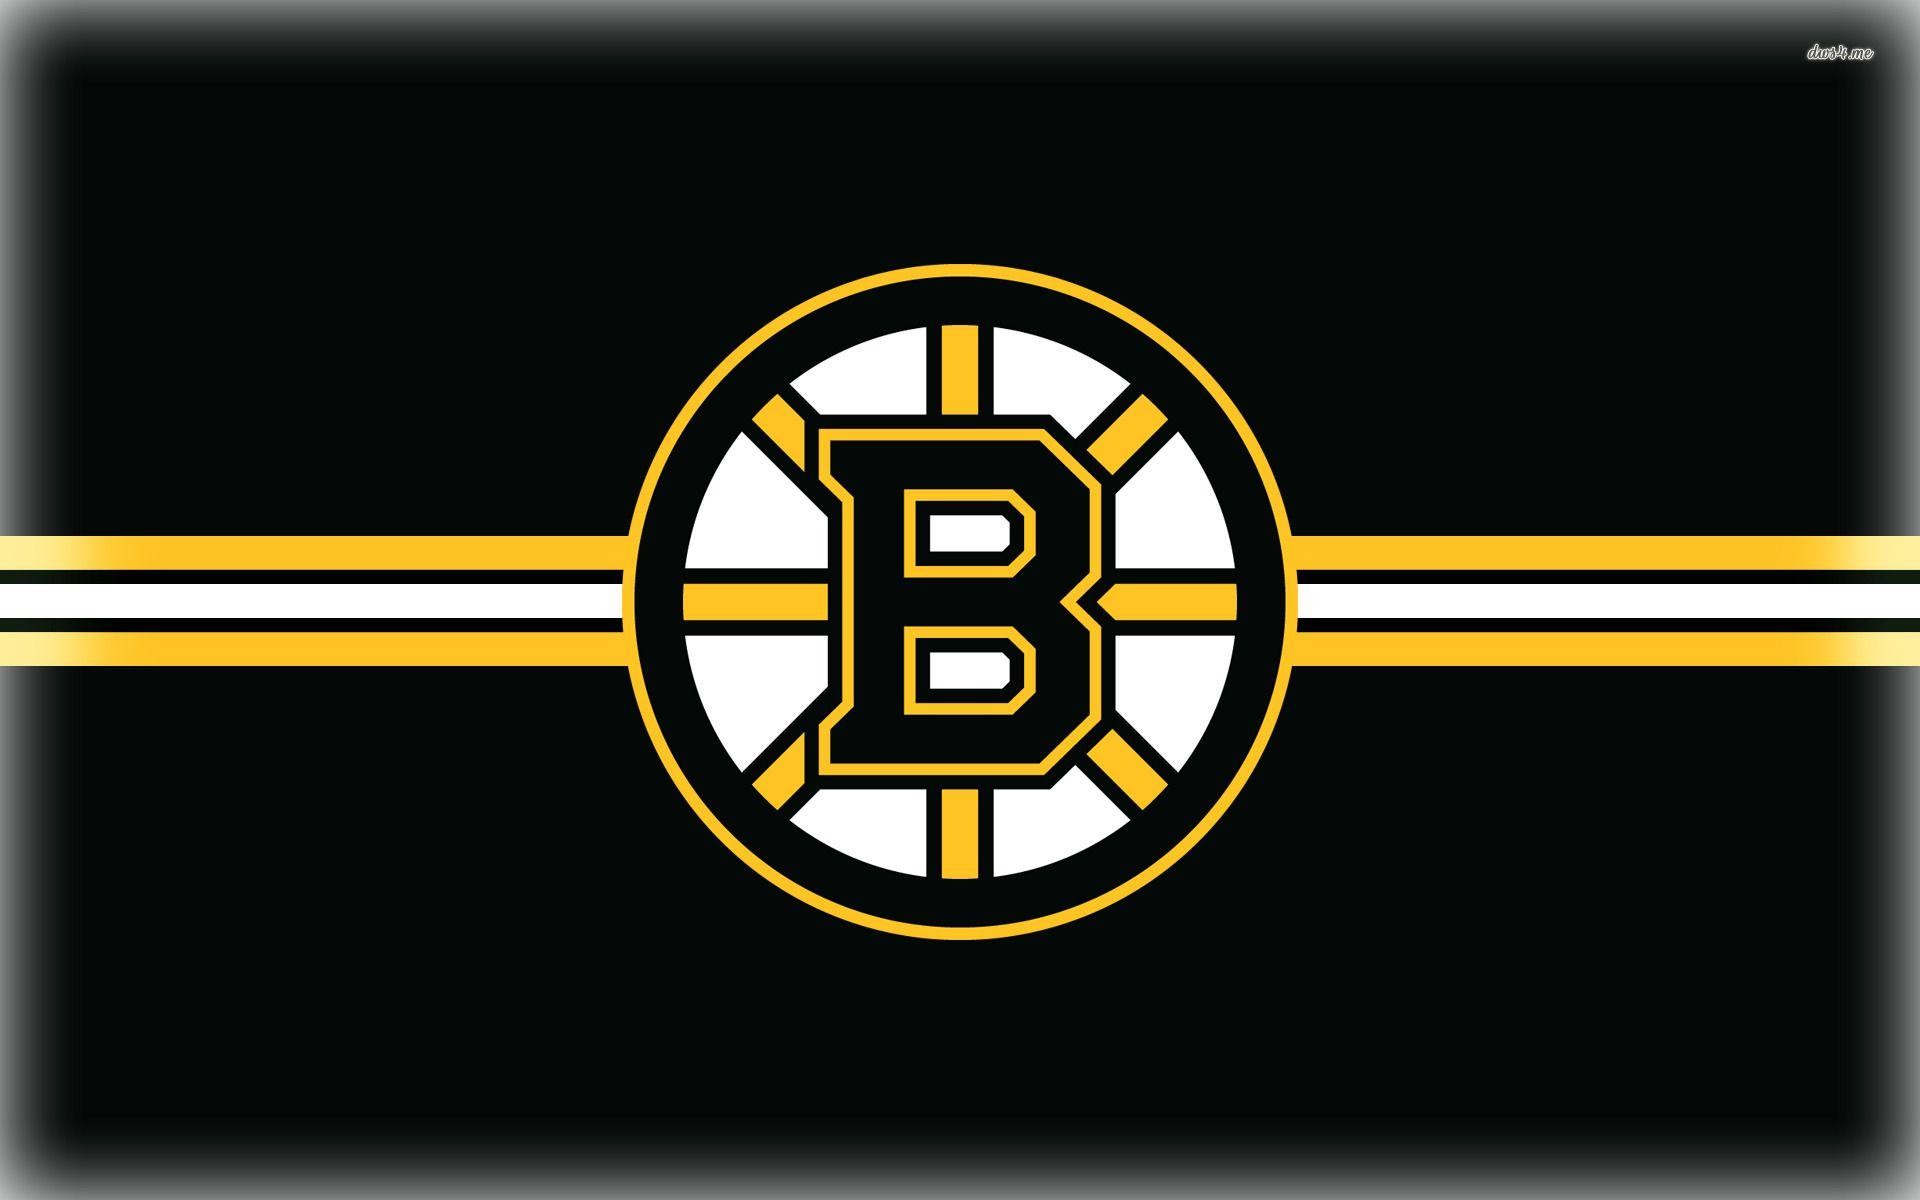 1920x1200 Boston Bruins Wallpapers - Full HD wallpaper search